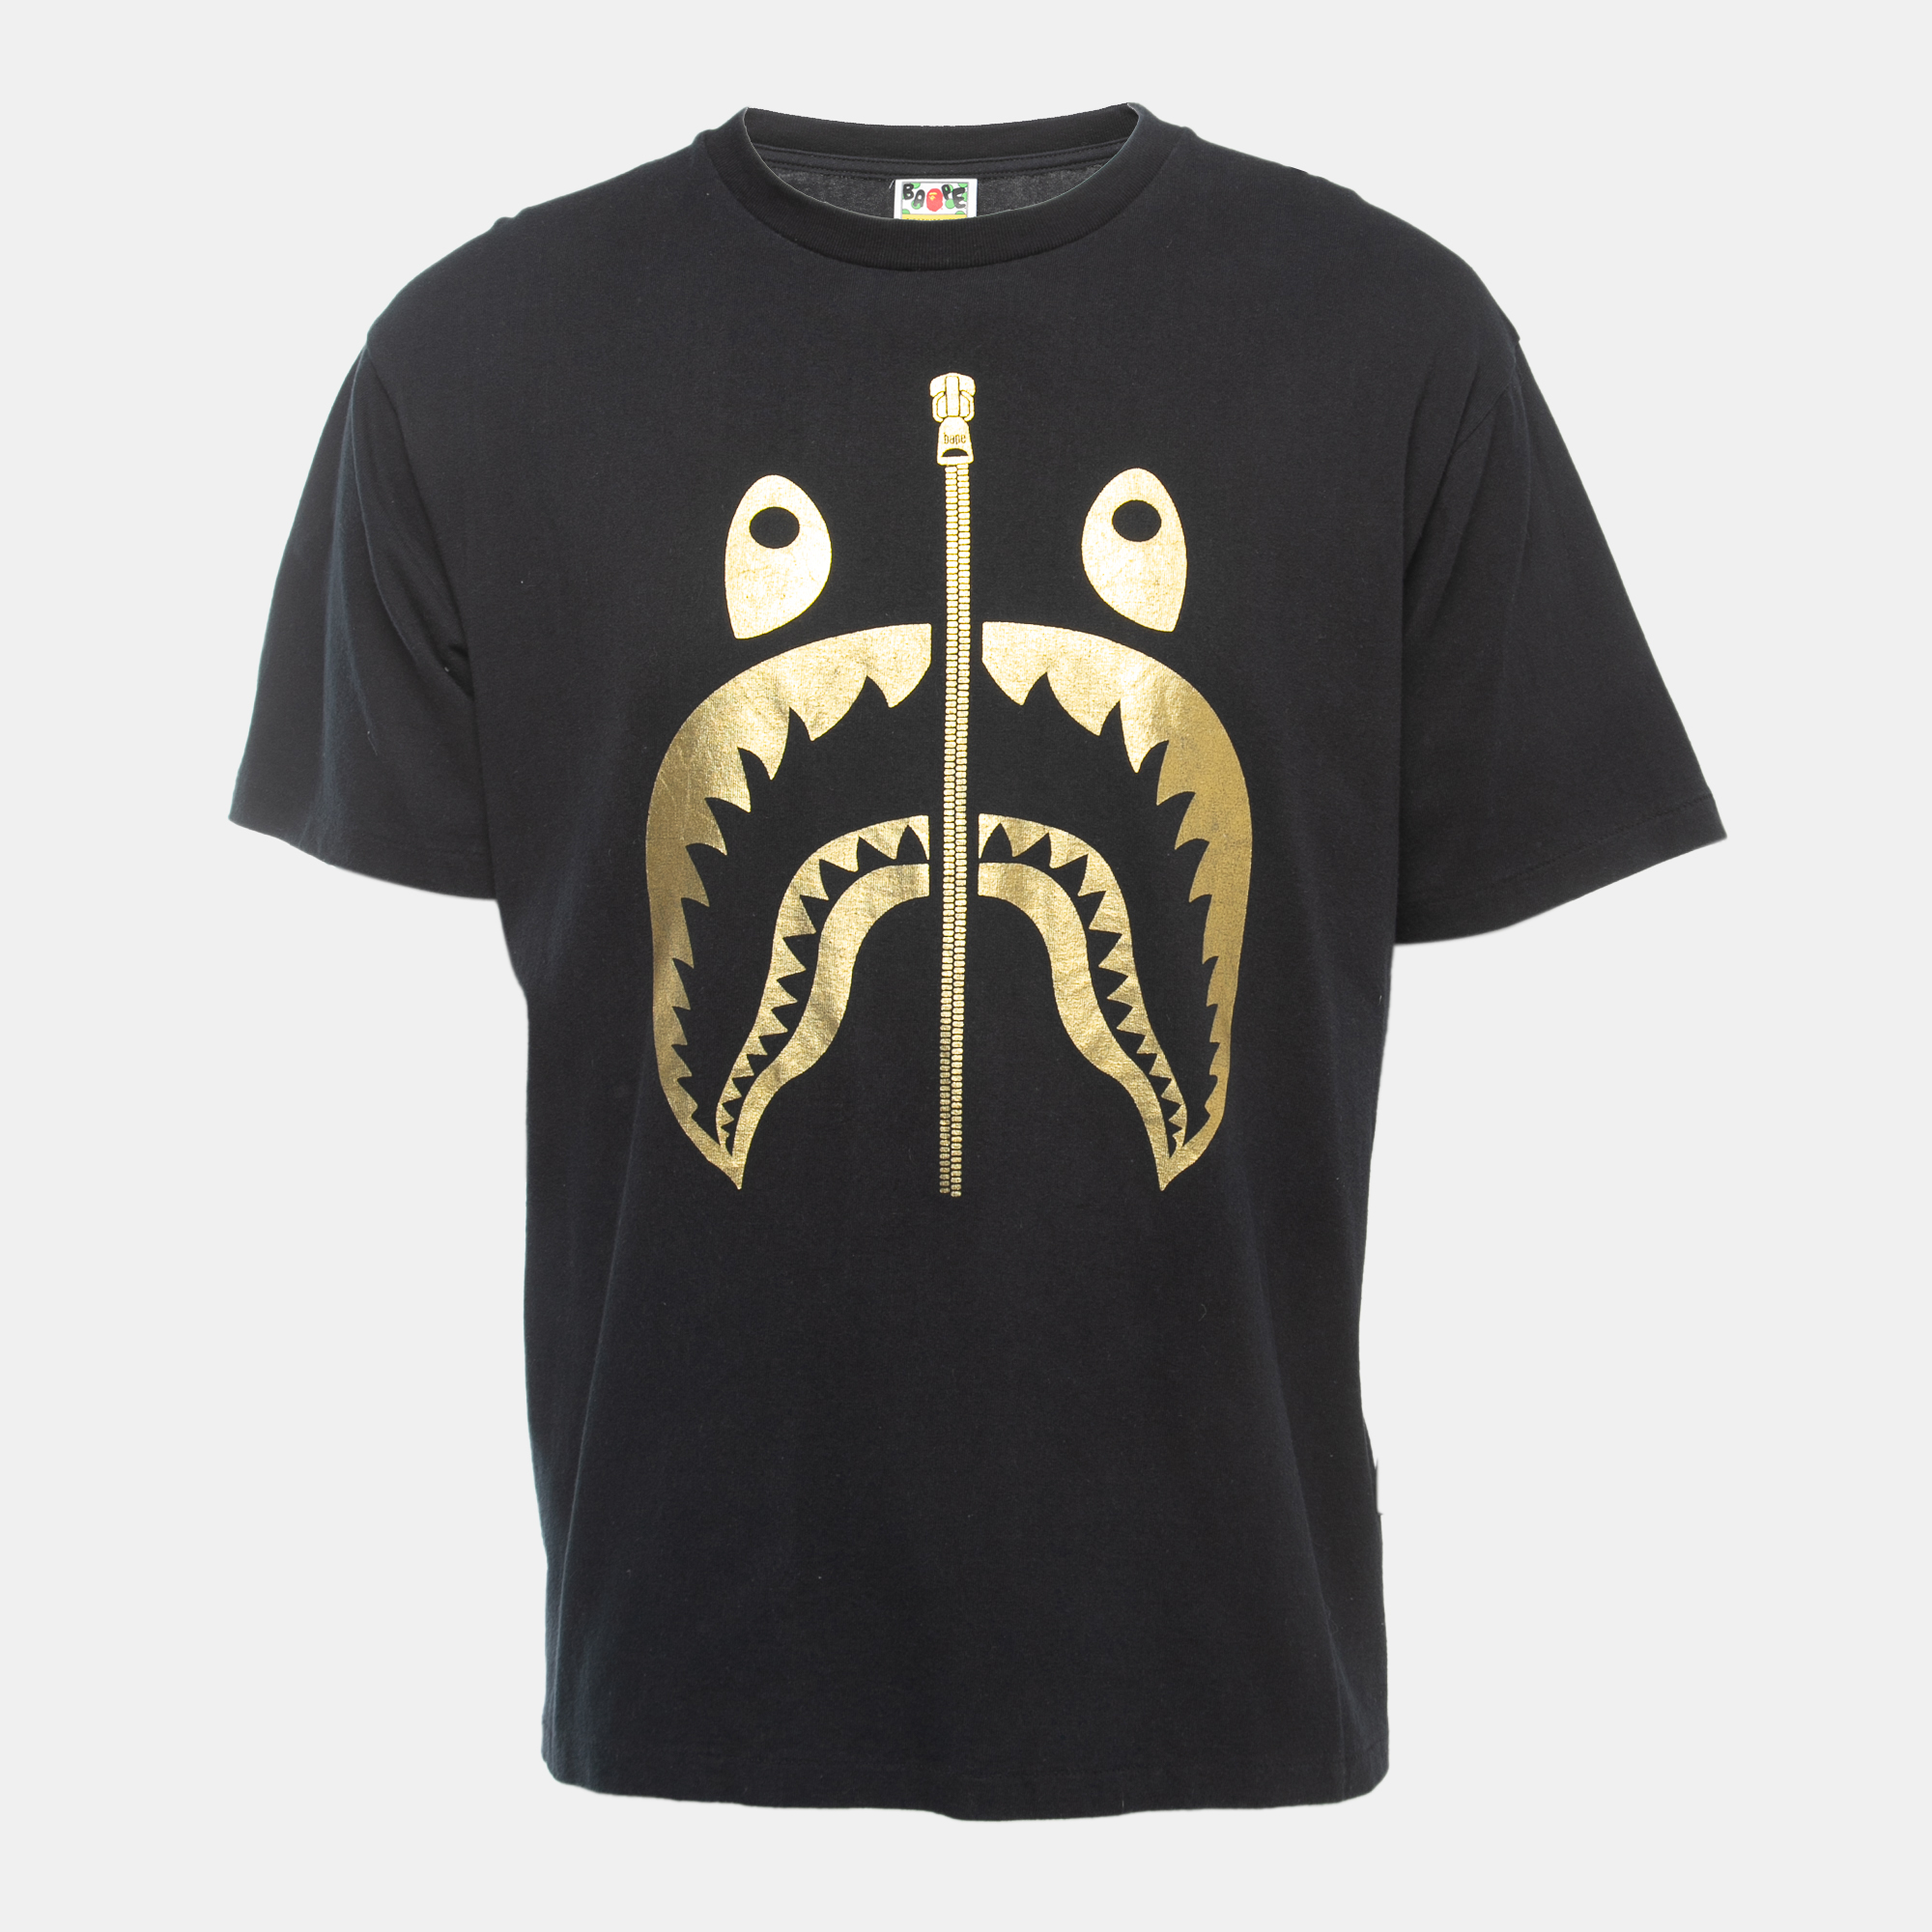 A Bathing Ape Black Shark Zip Print Cotton Crew Neck T-Shirt XL